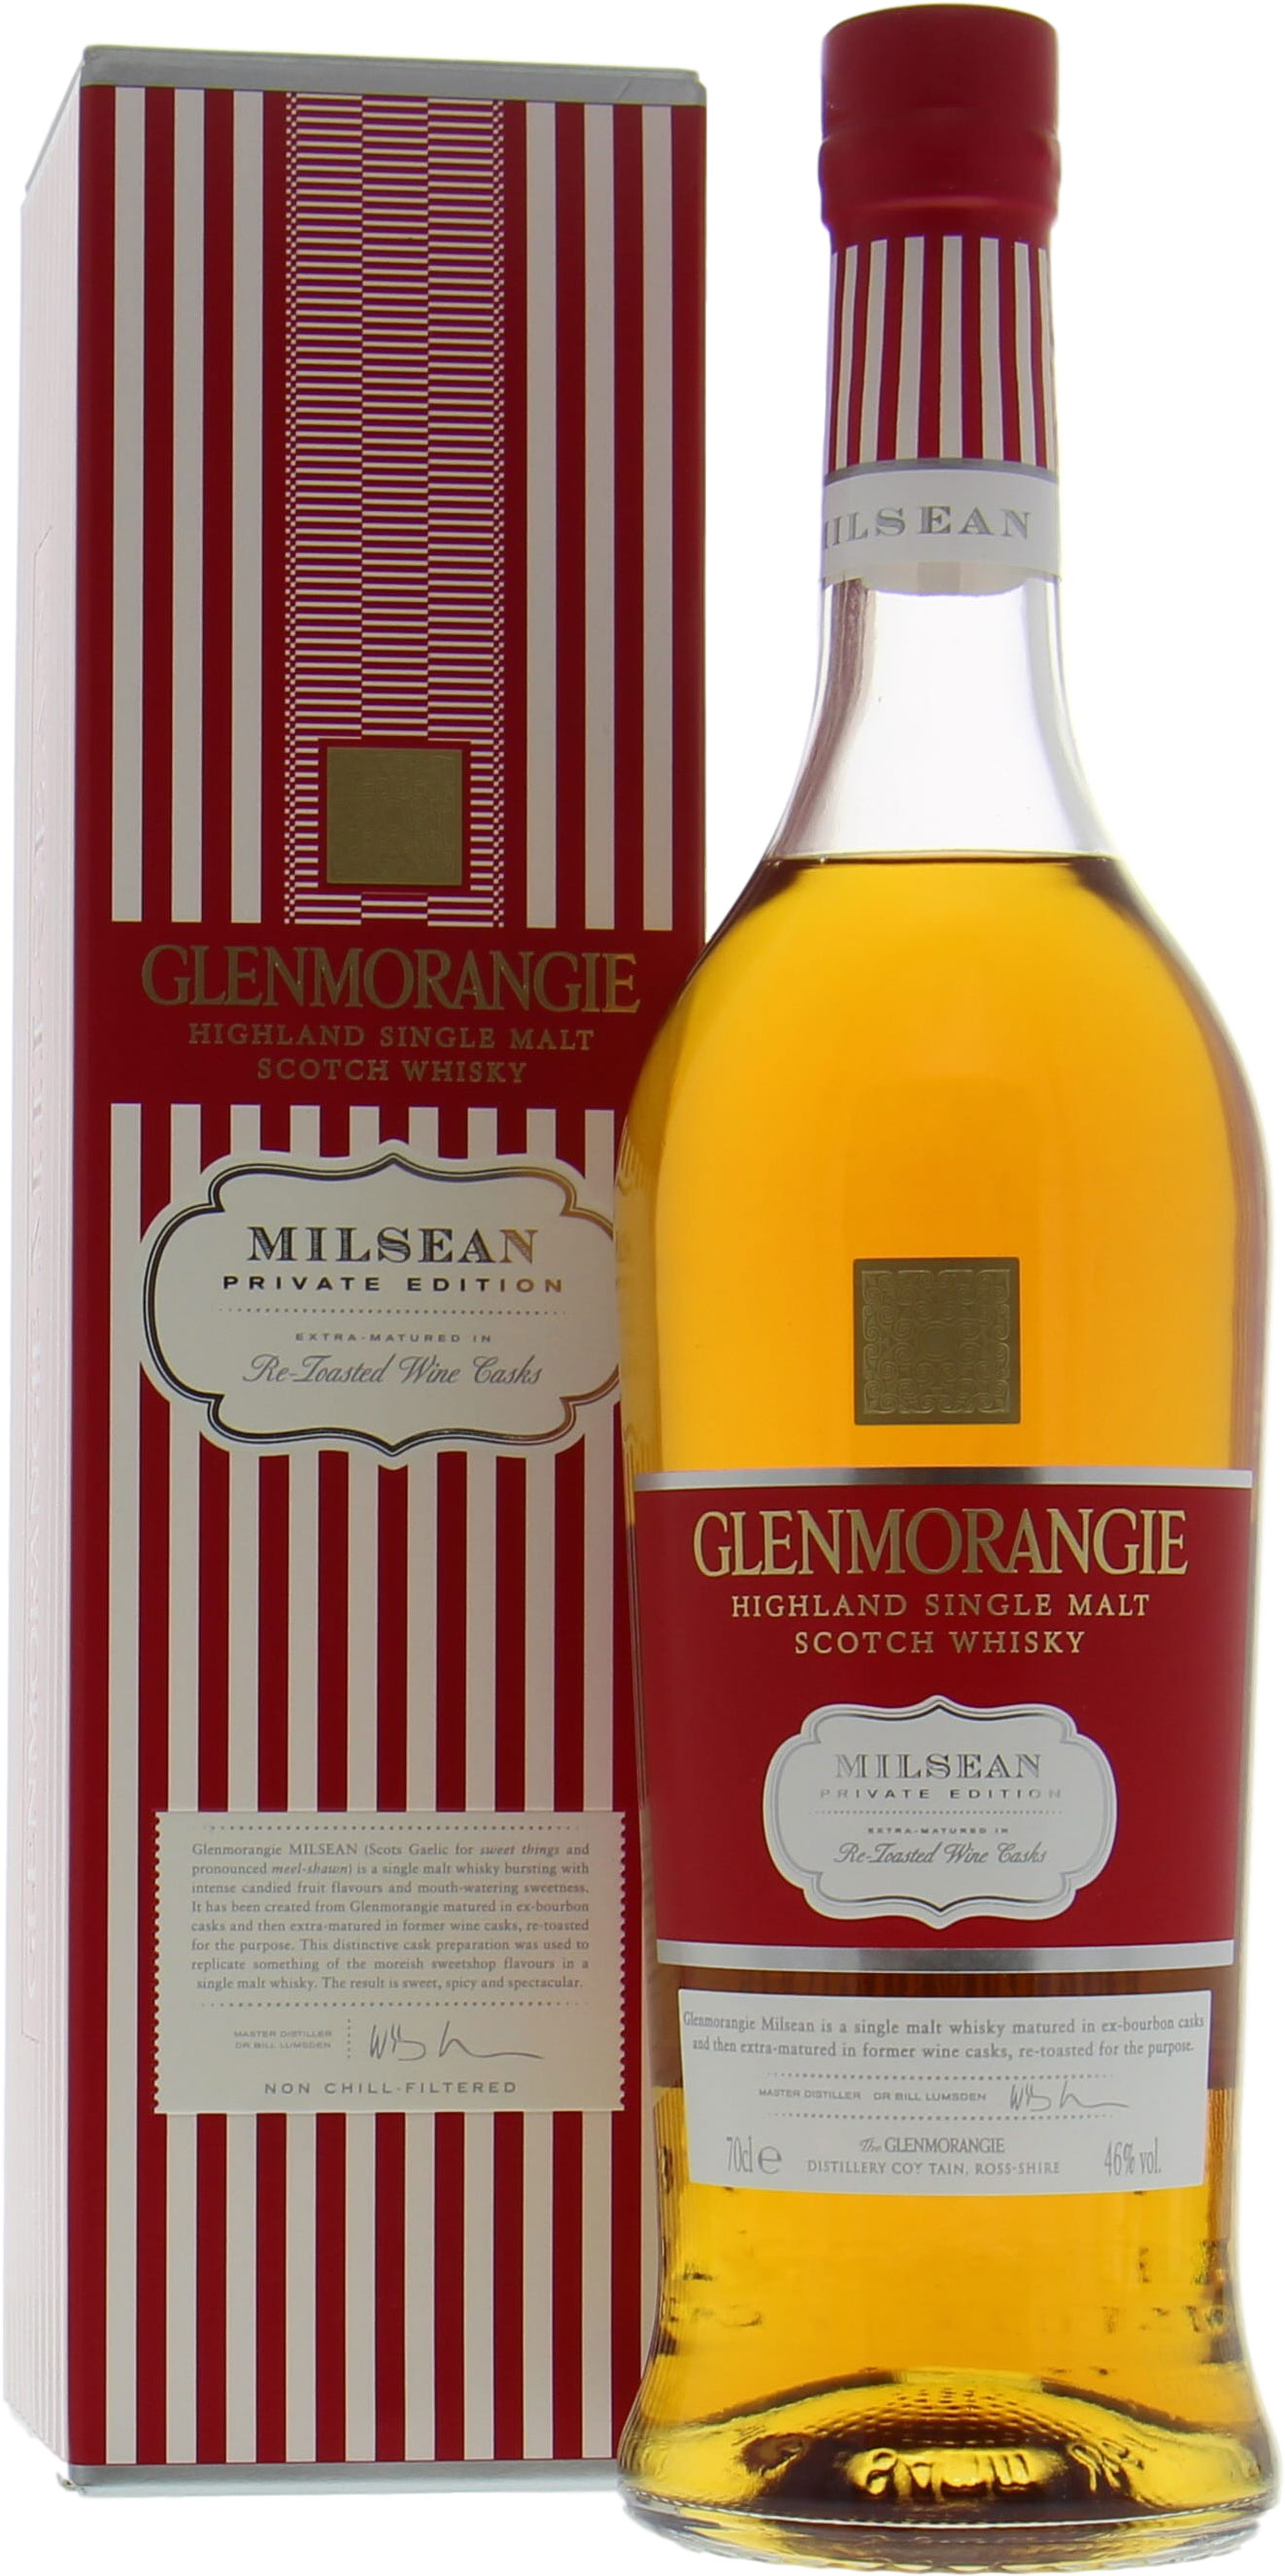 Glenmorangie - Milsean Private Edition 46% NV Perfect